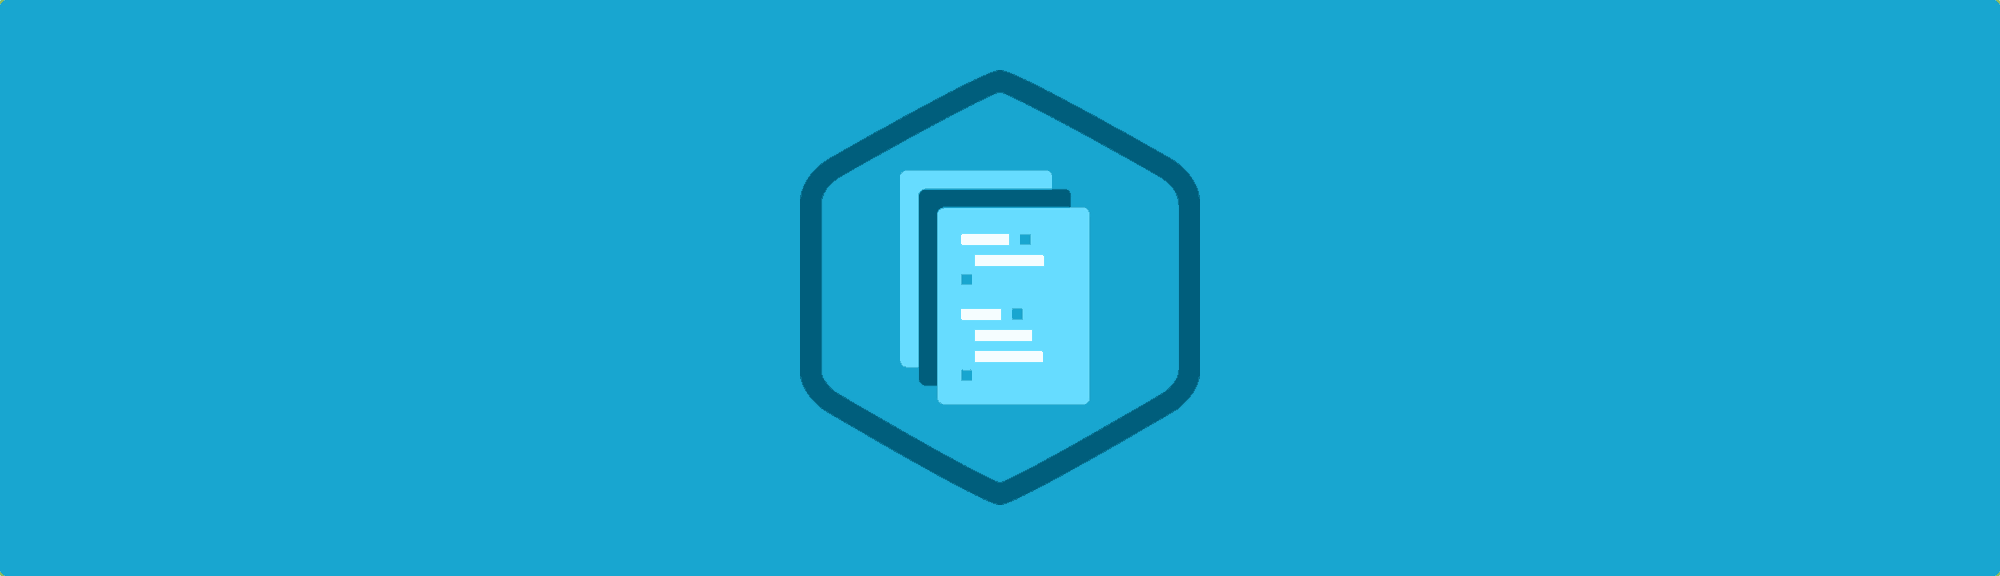 Backslash and Blue Box Logo - How to Fix a Broken Image - Treehouse Blog